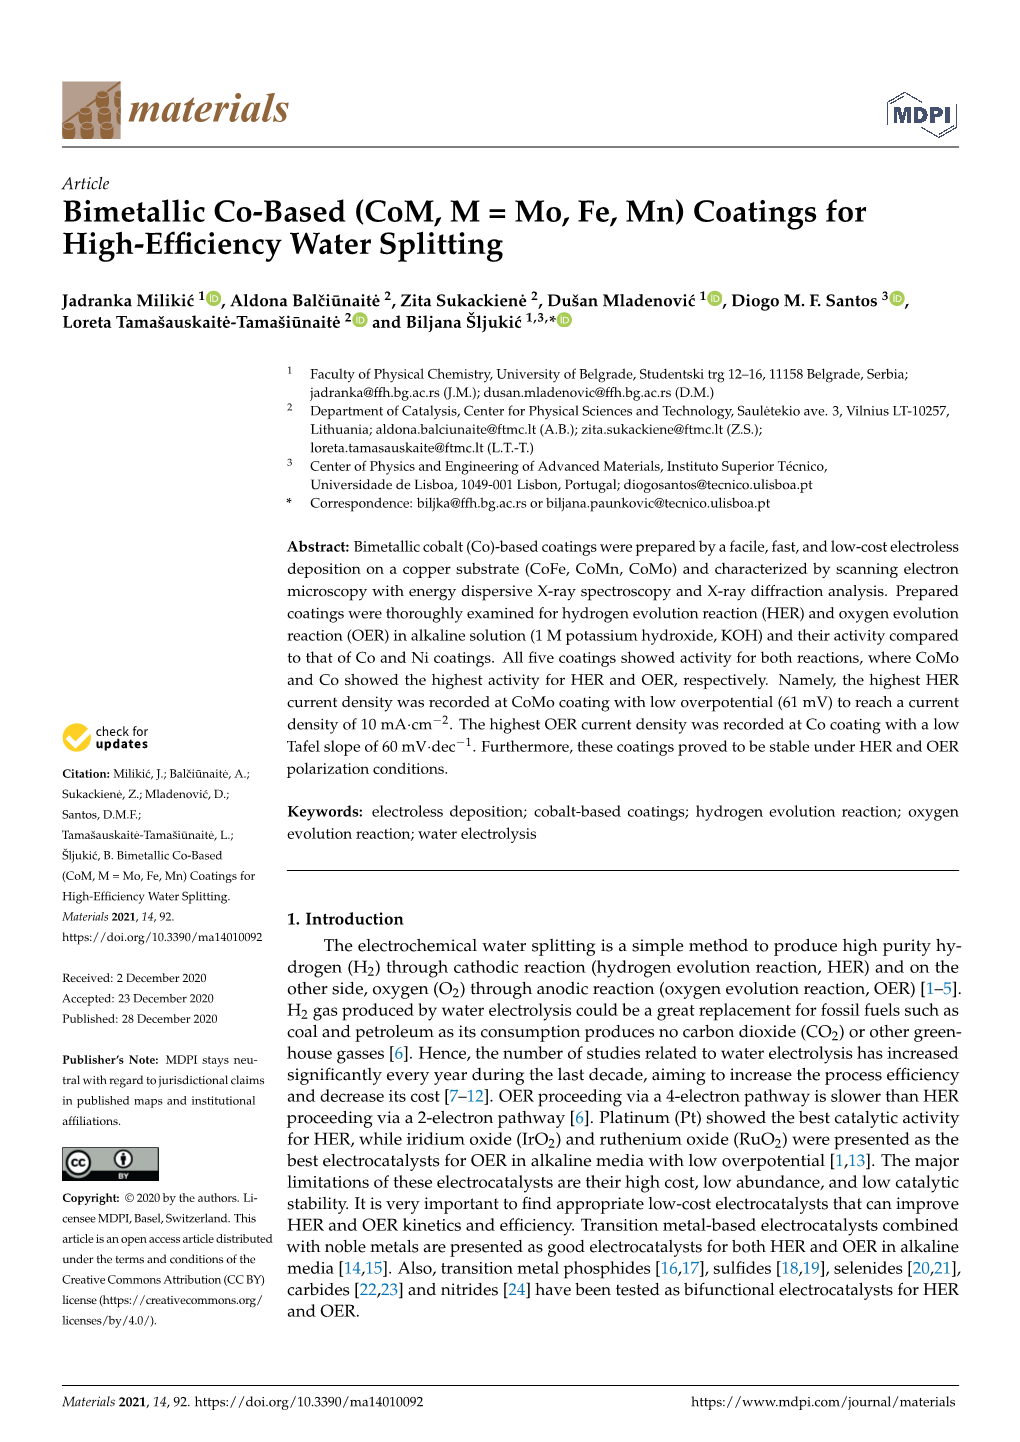 (Com, M = Mo, Fe, Mn) Coatings for High-Efficiency Water Splitting